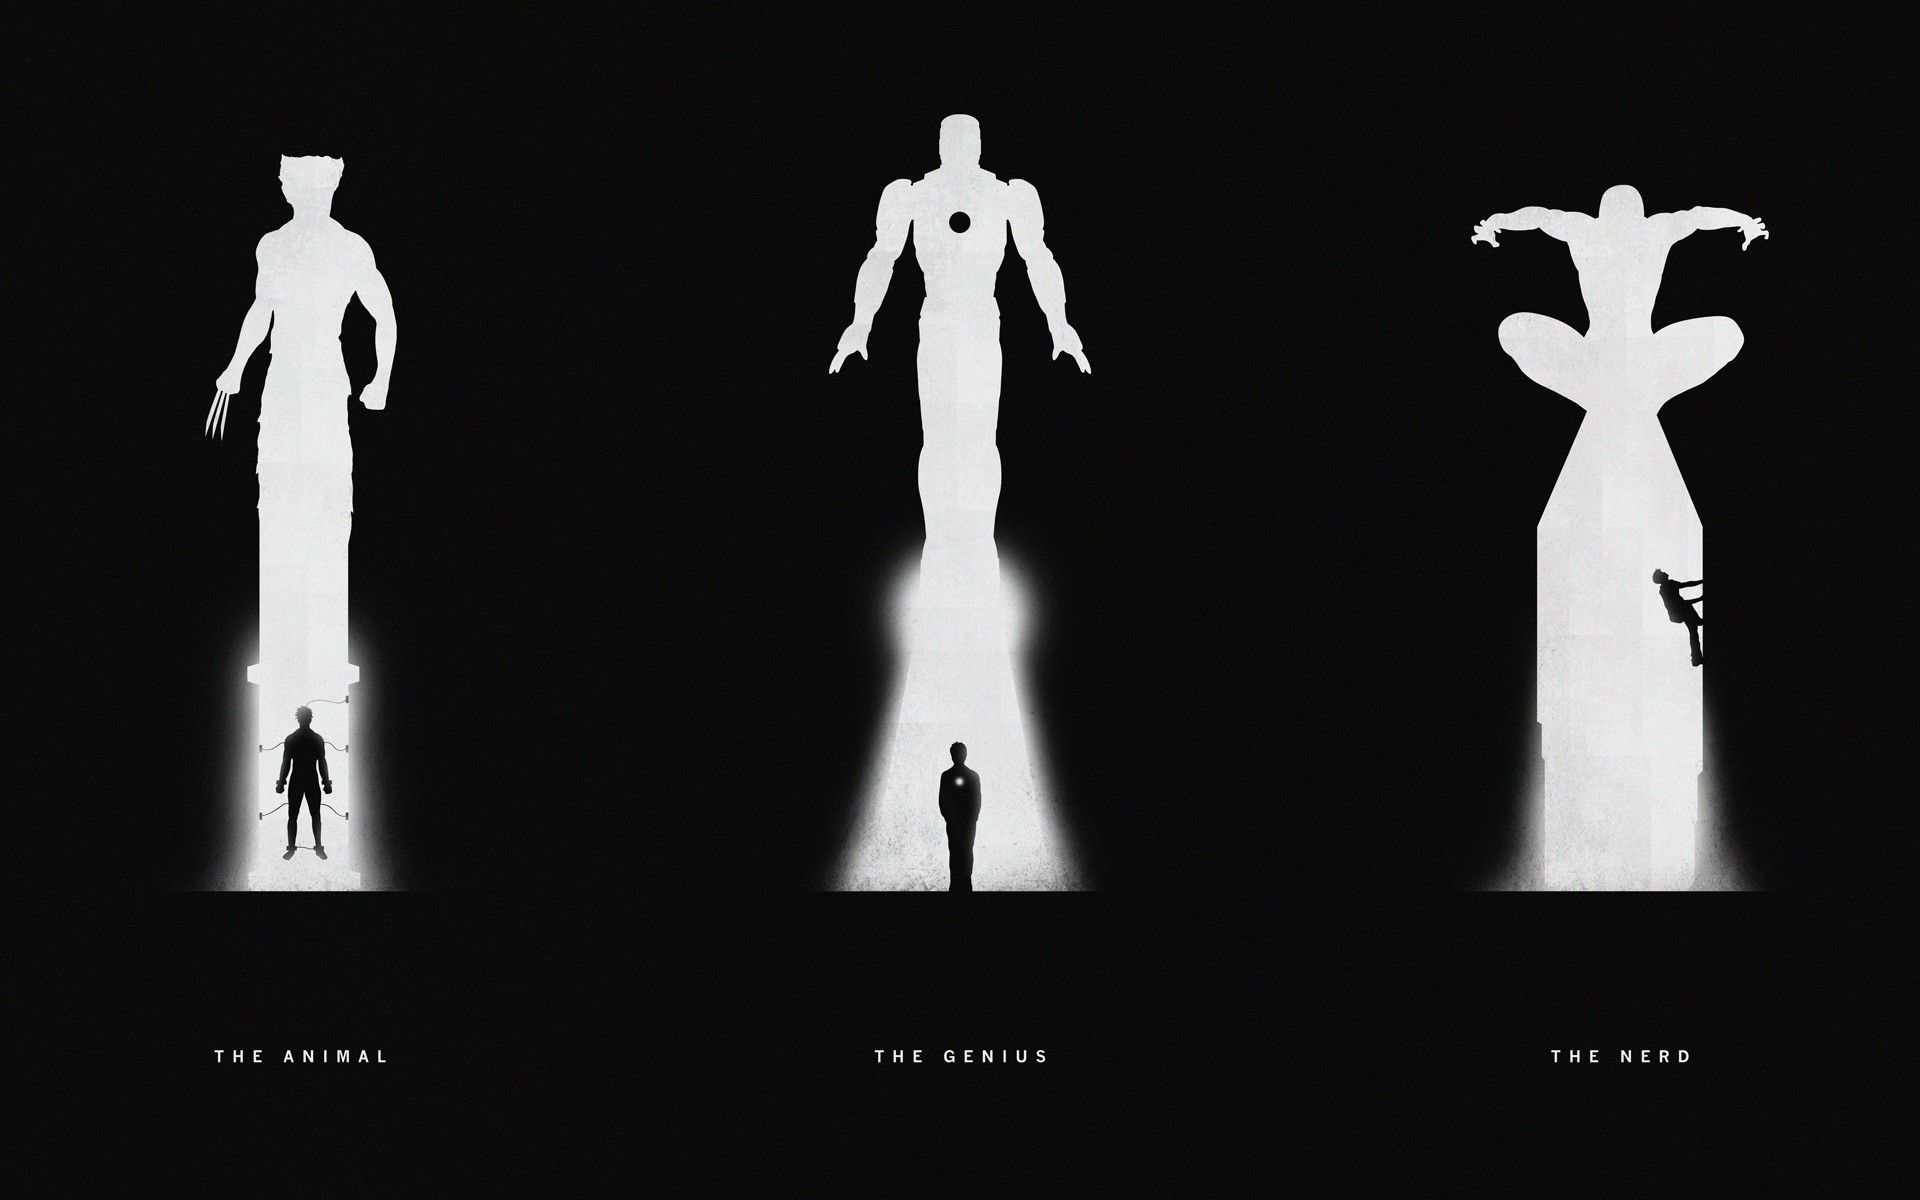 Superhero silhouettes Wallpaper. Avengers wallpaper, Superhero silhouette, Black spiderman